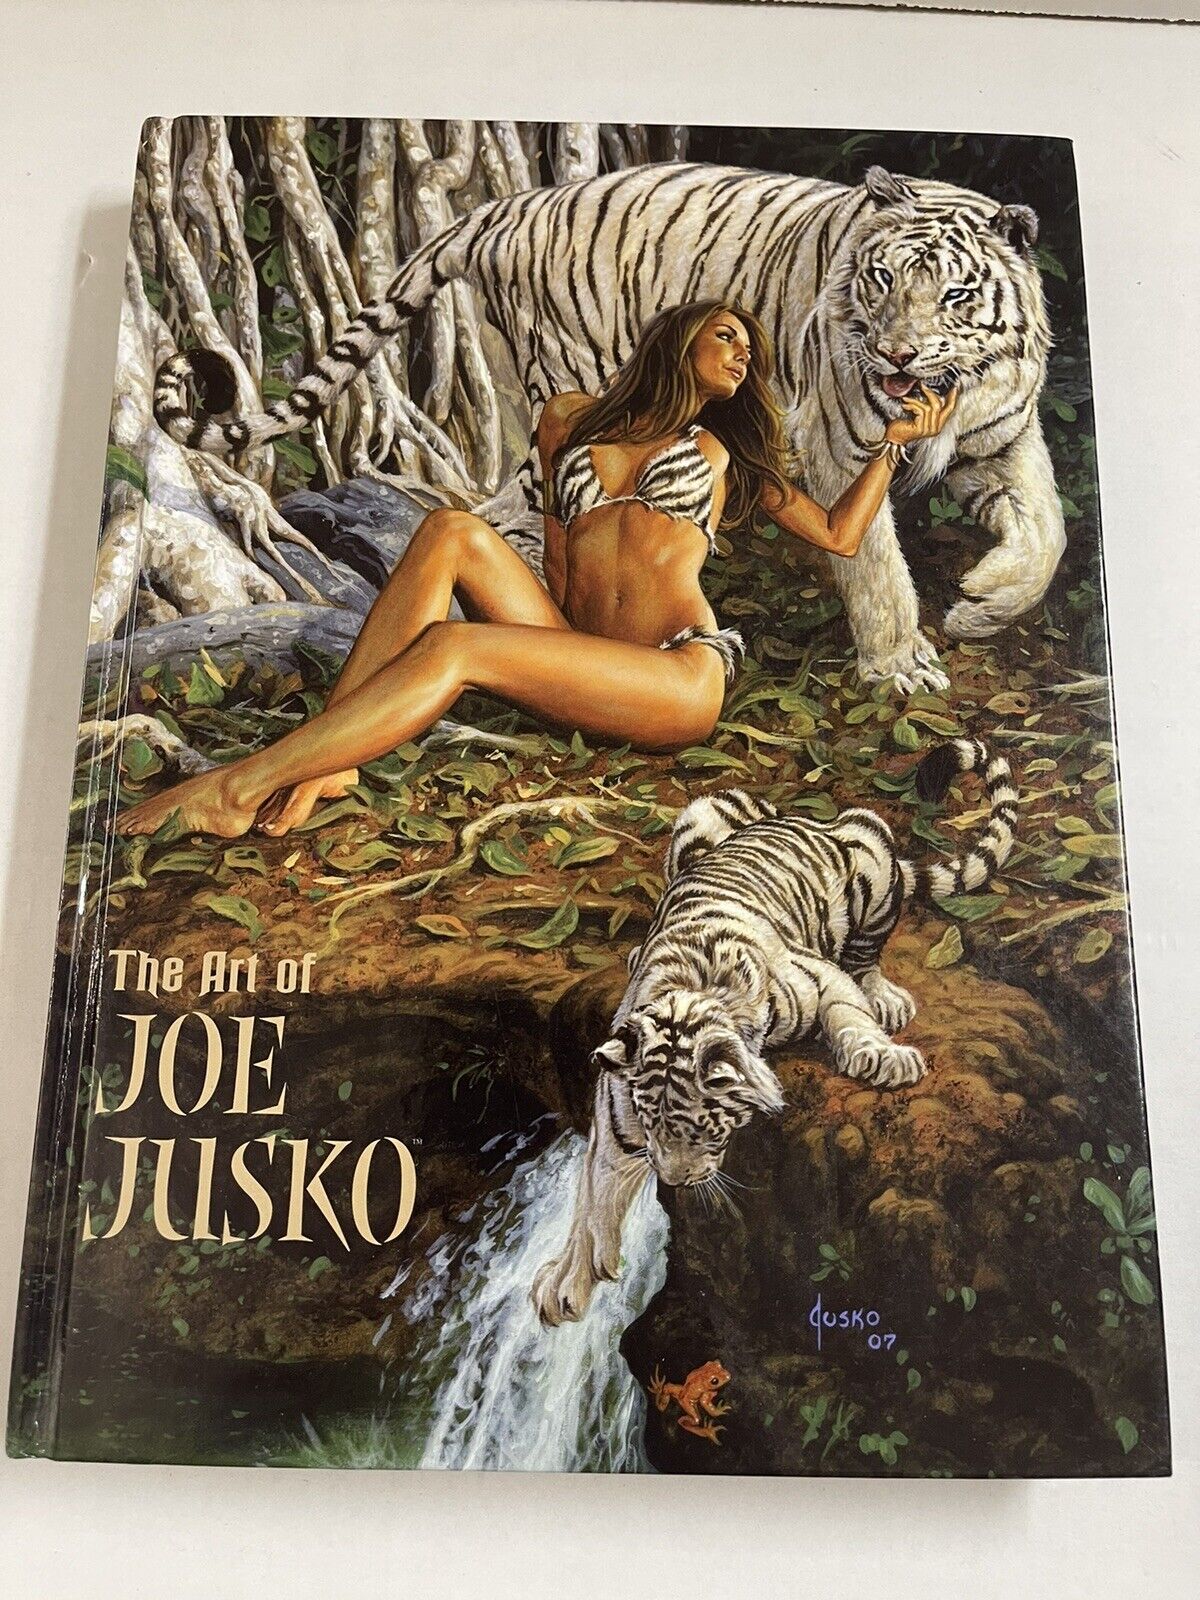 The Art of Joe Jusko by Desperado Hardcover Art Book